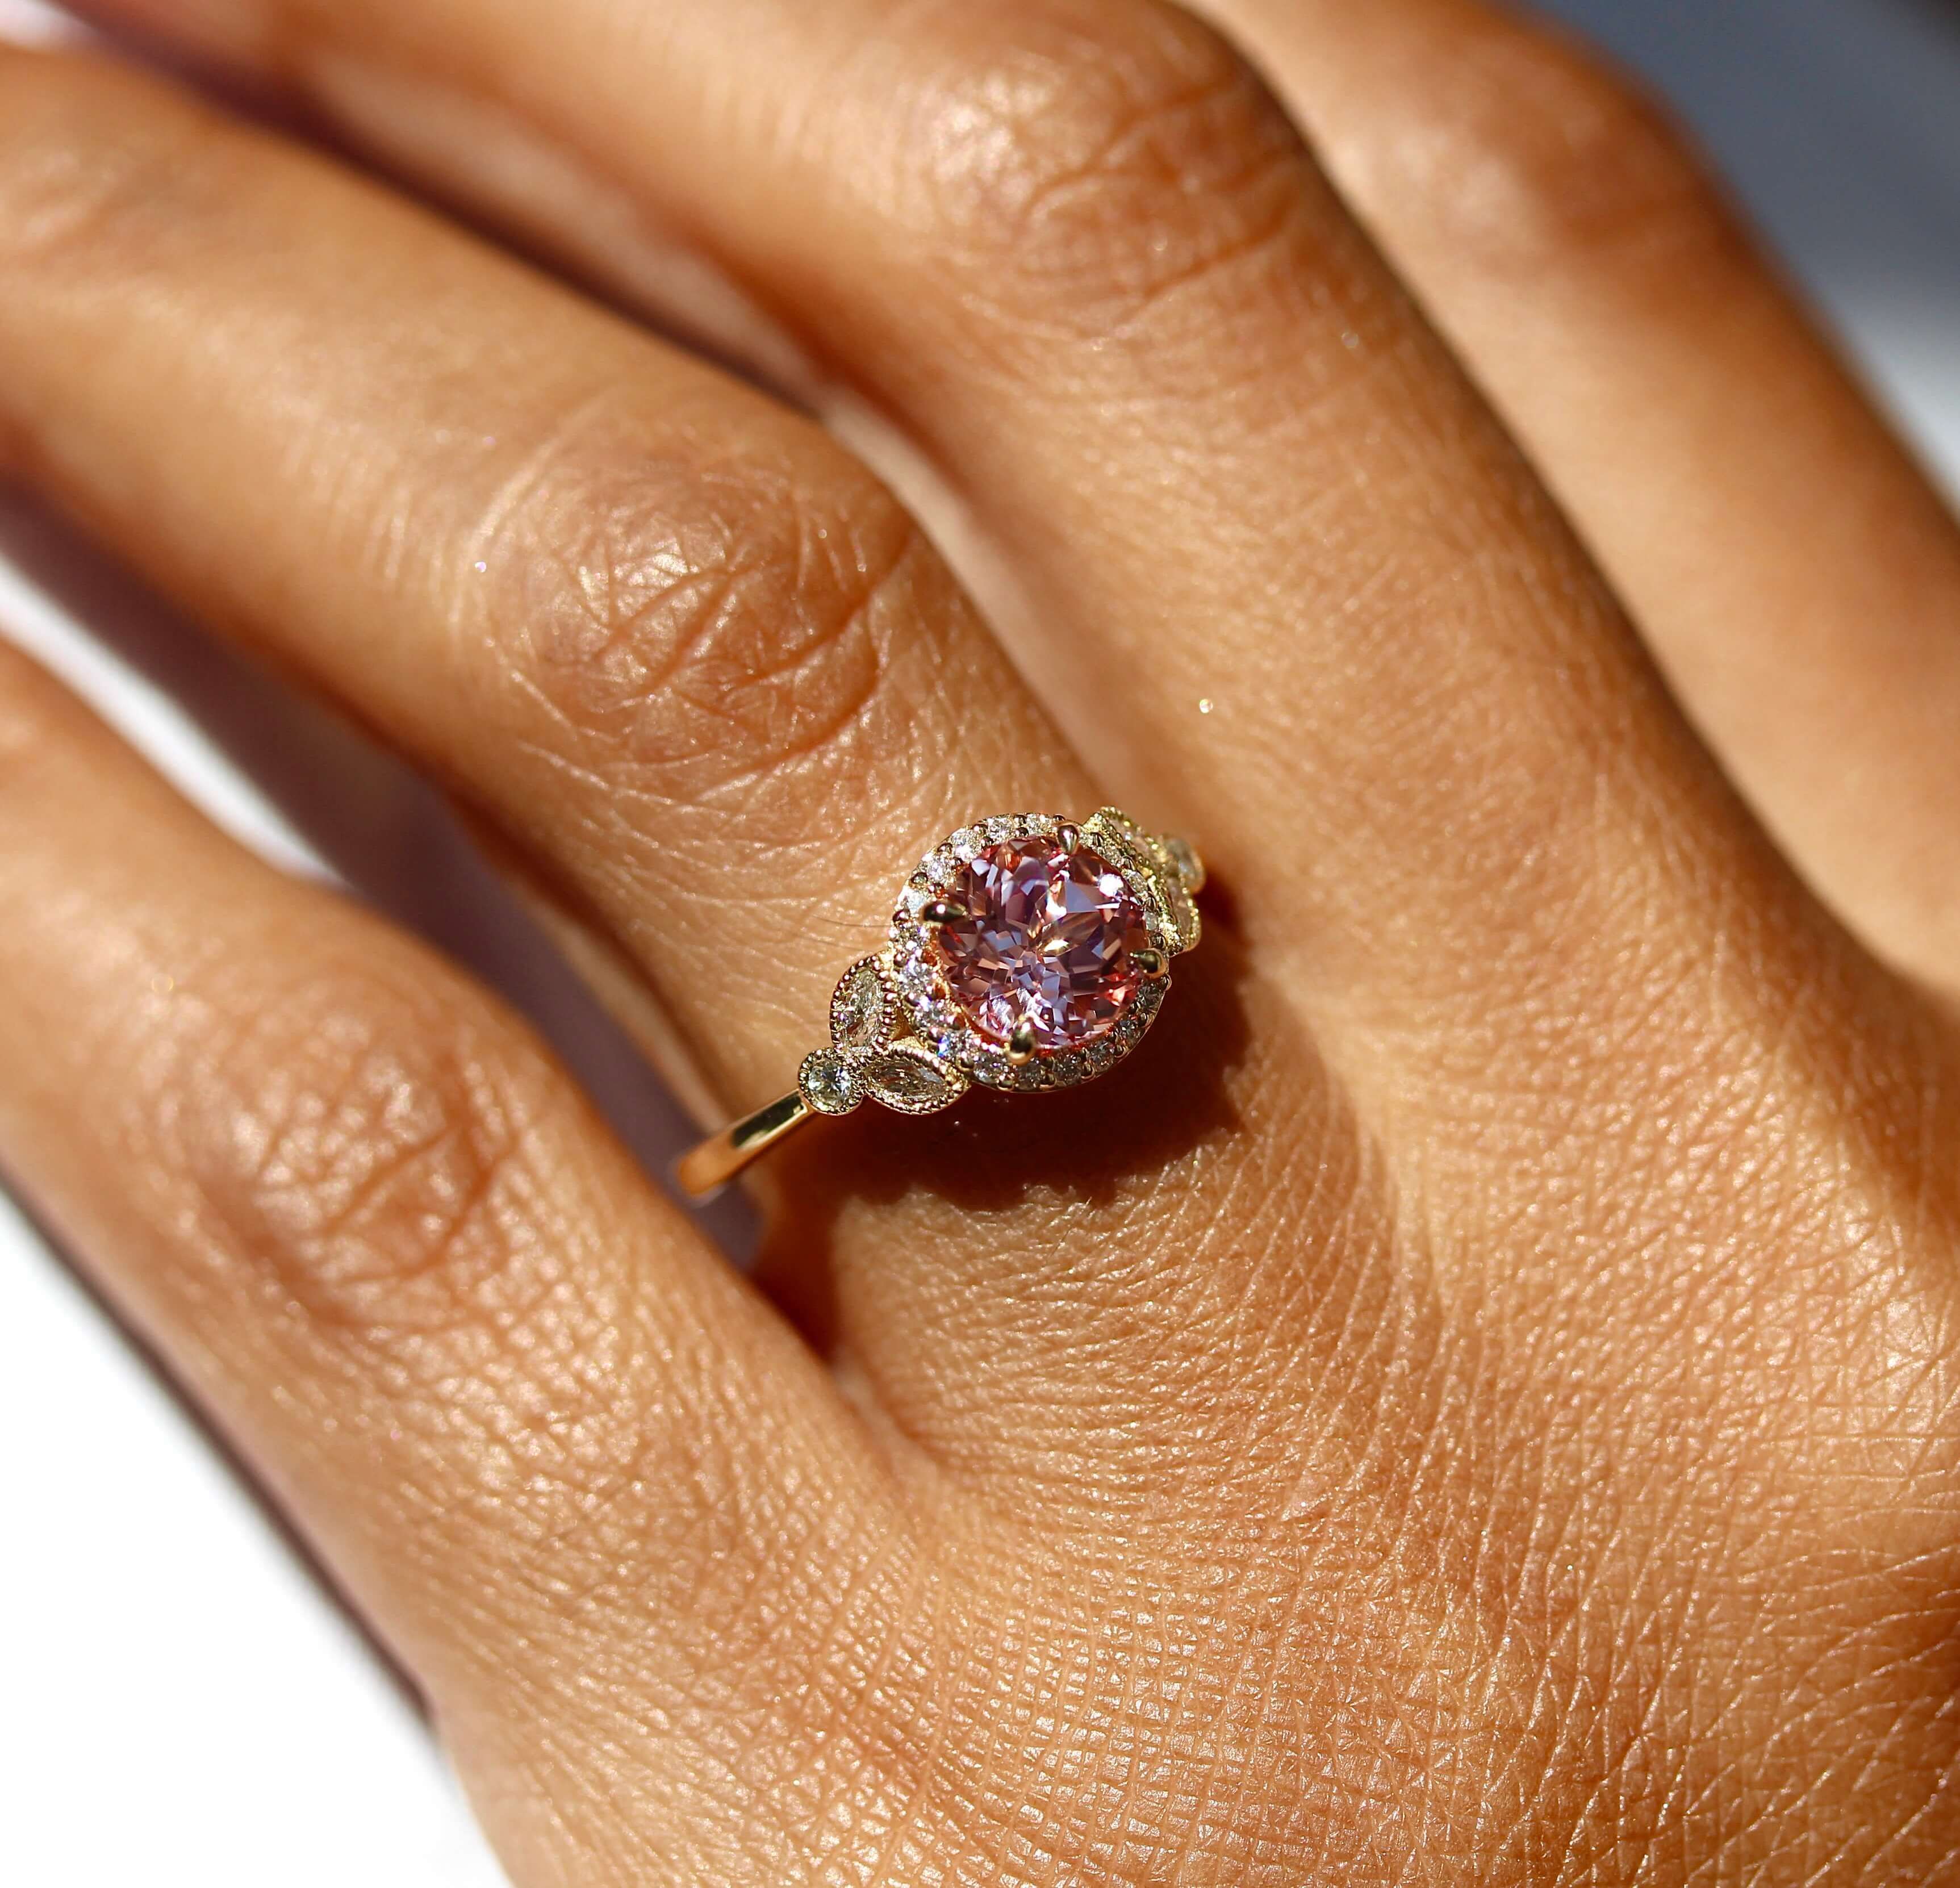 Buy Garnet, Natural Gemstone Rings, 92.5 Sterling Silver Ring, Women For  Rings, (3.2 gm) (10) at Amazon.in